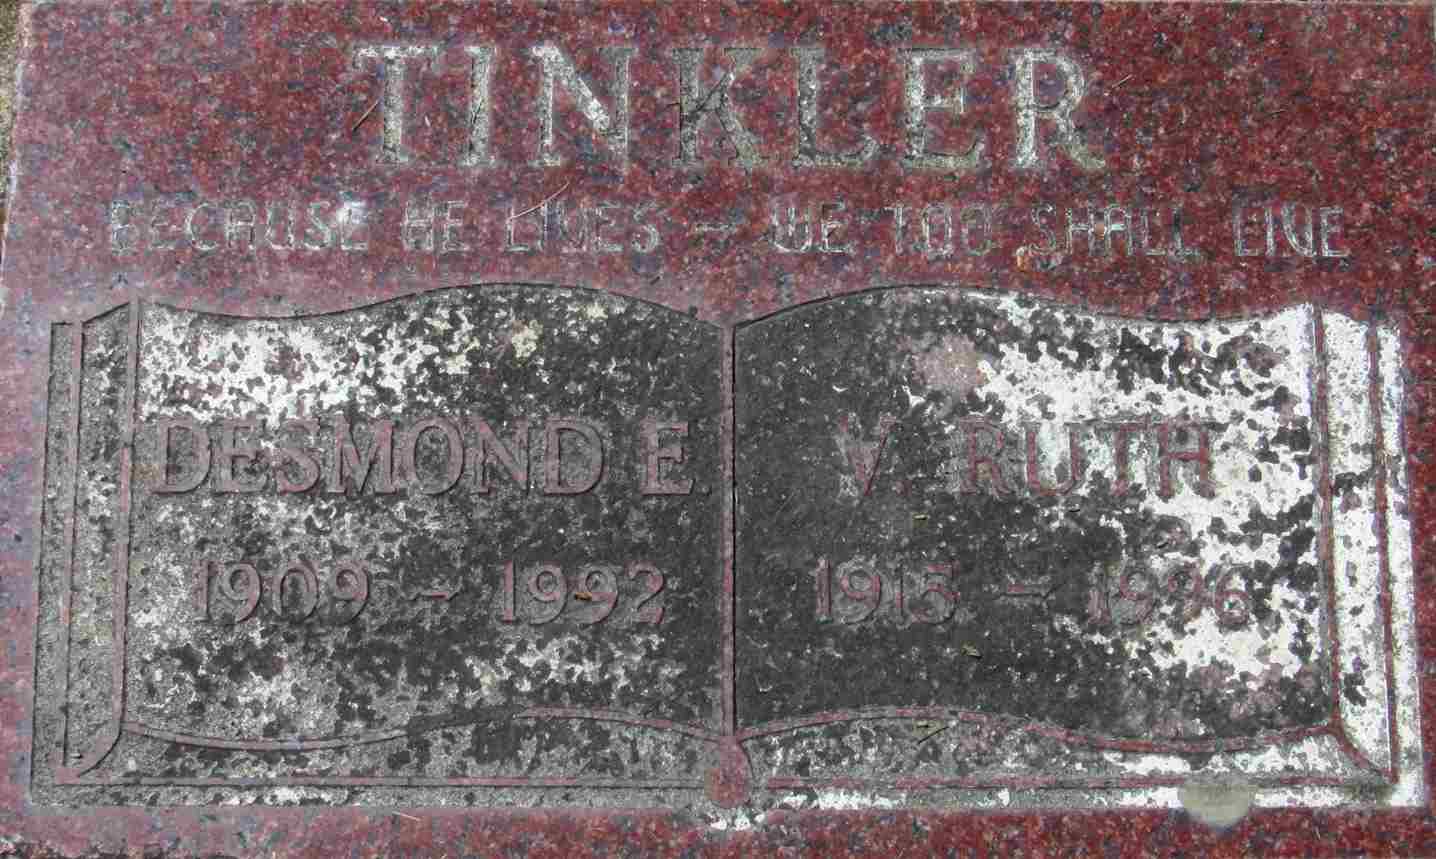 Gravestone of Desmond Ernest Tinkler and Vera Ruth Brown